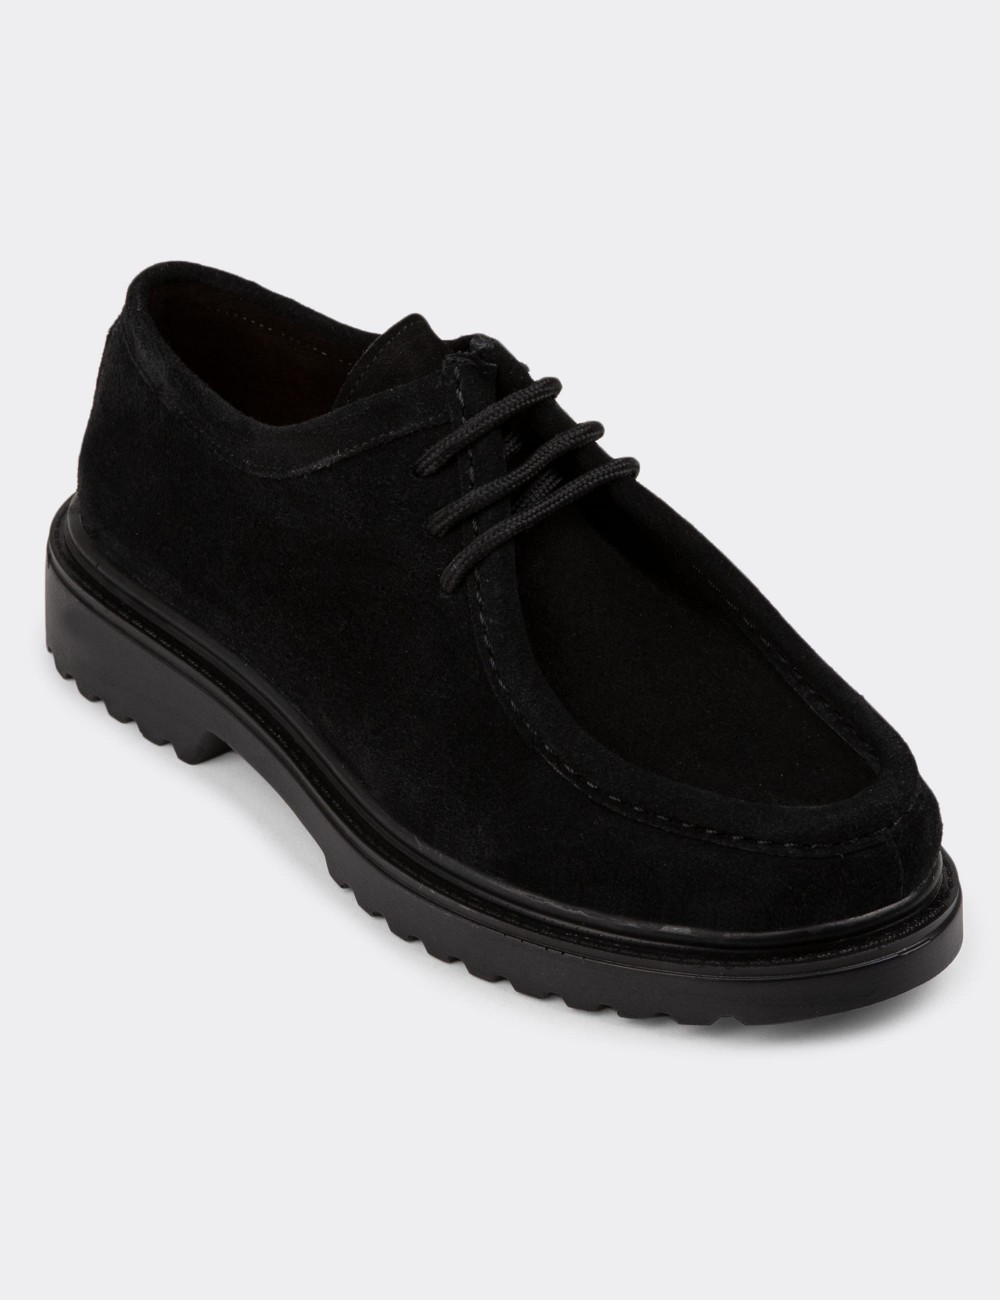 Black Suede Leather Lace-up Shoes - 01935ZSYHC02